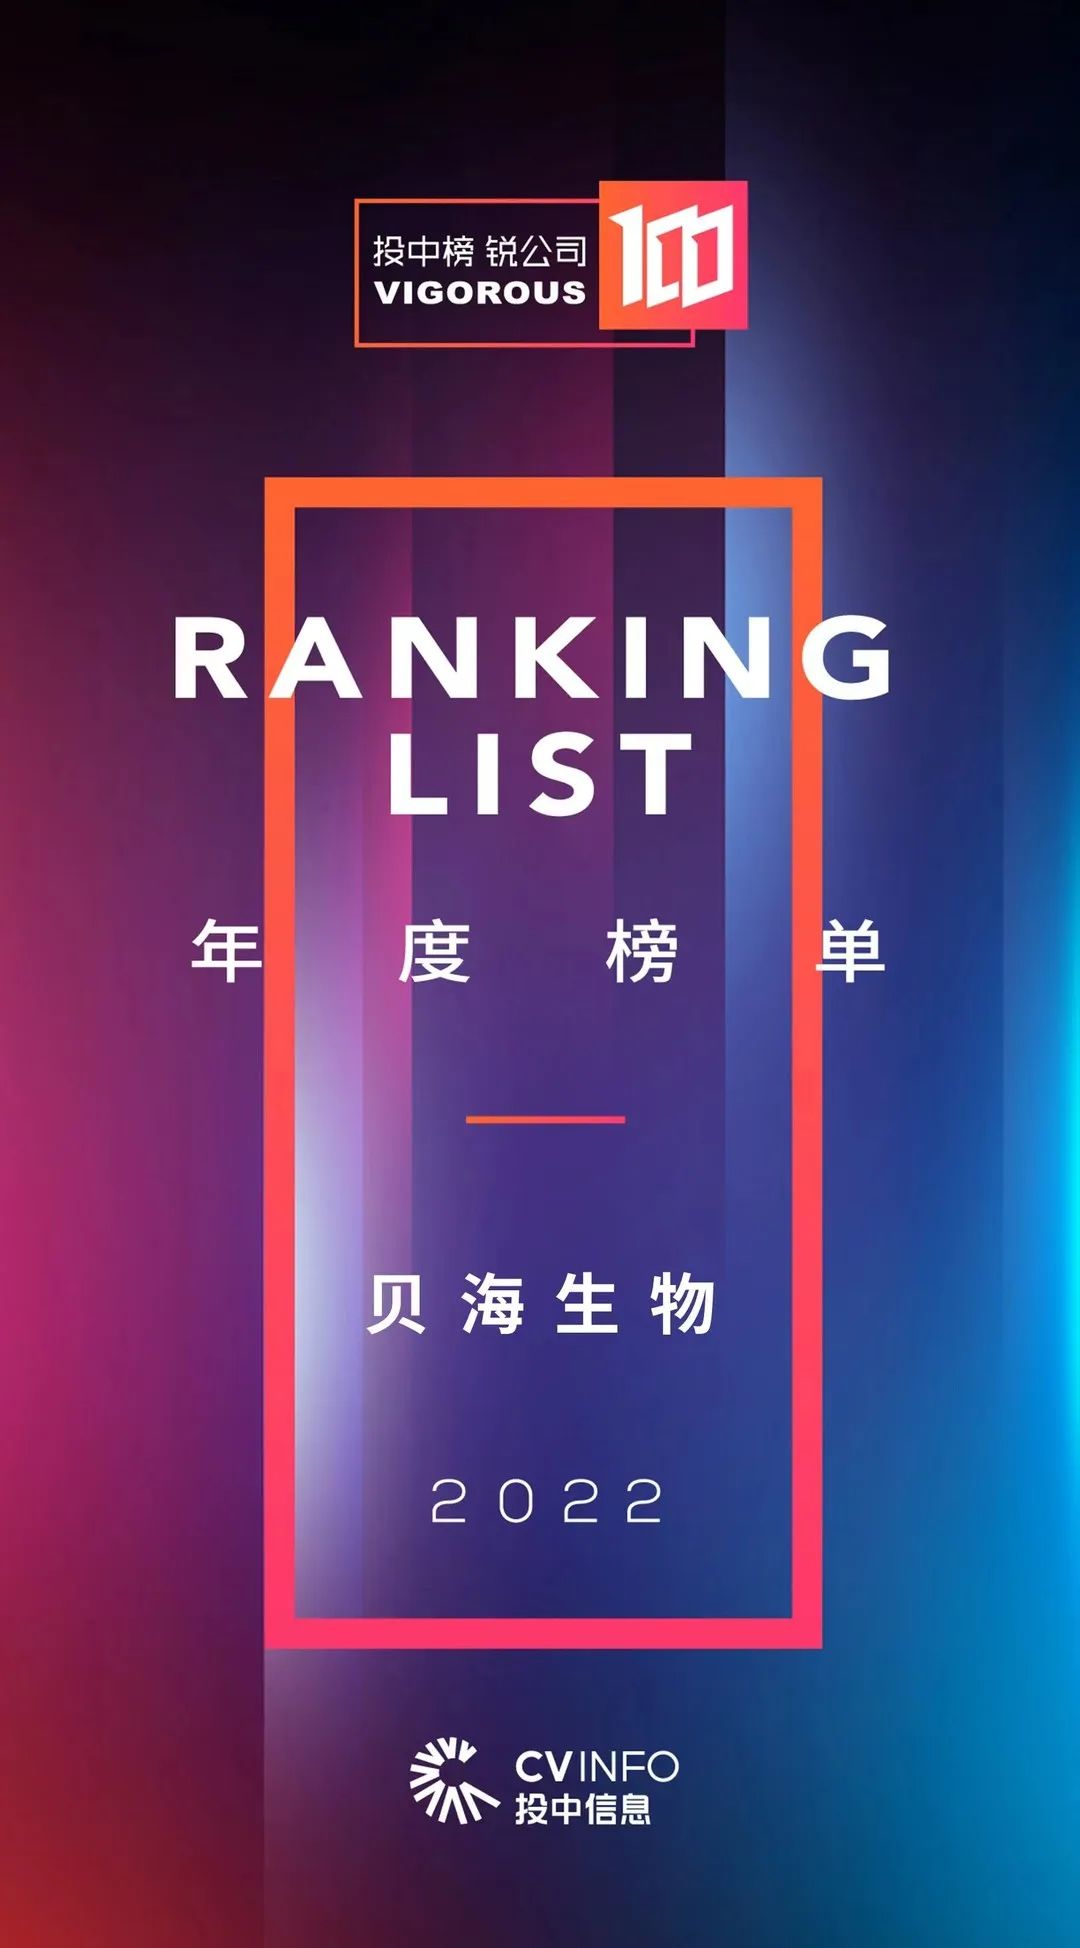 Powered by Discuz!荣登“投中2022年度锐公司100榜单”